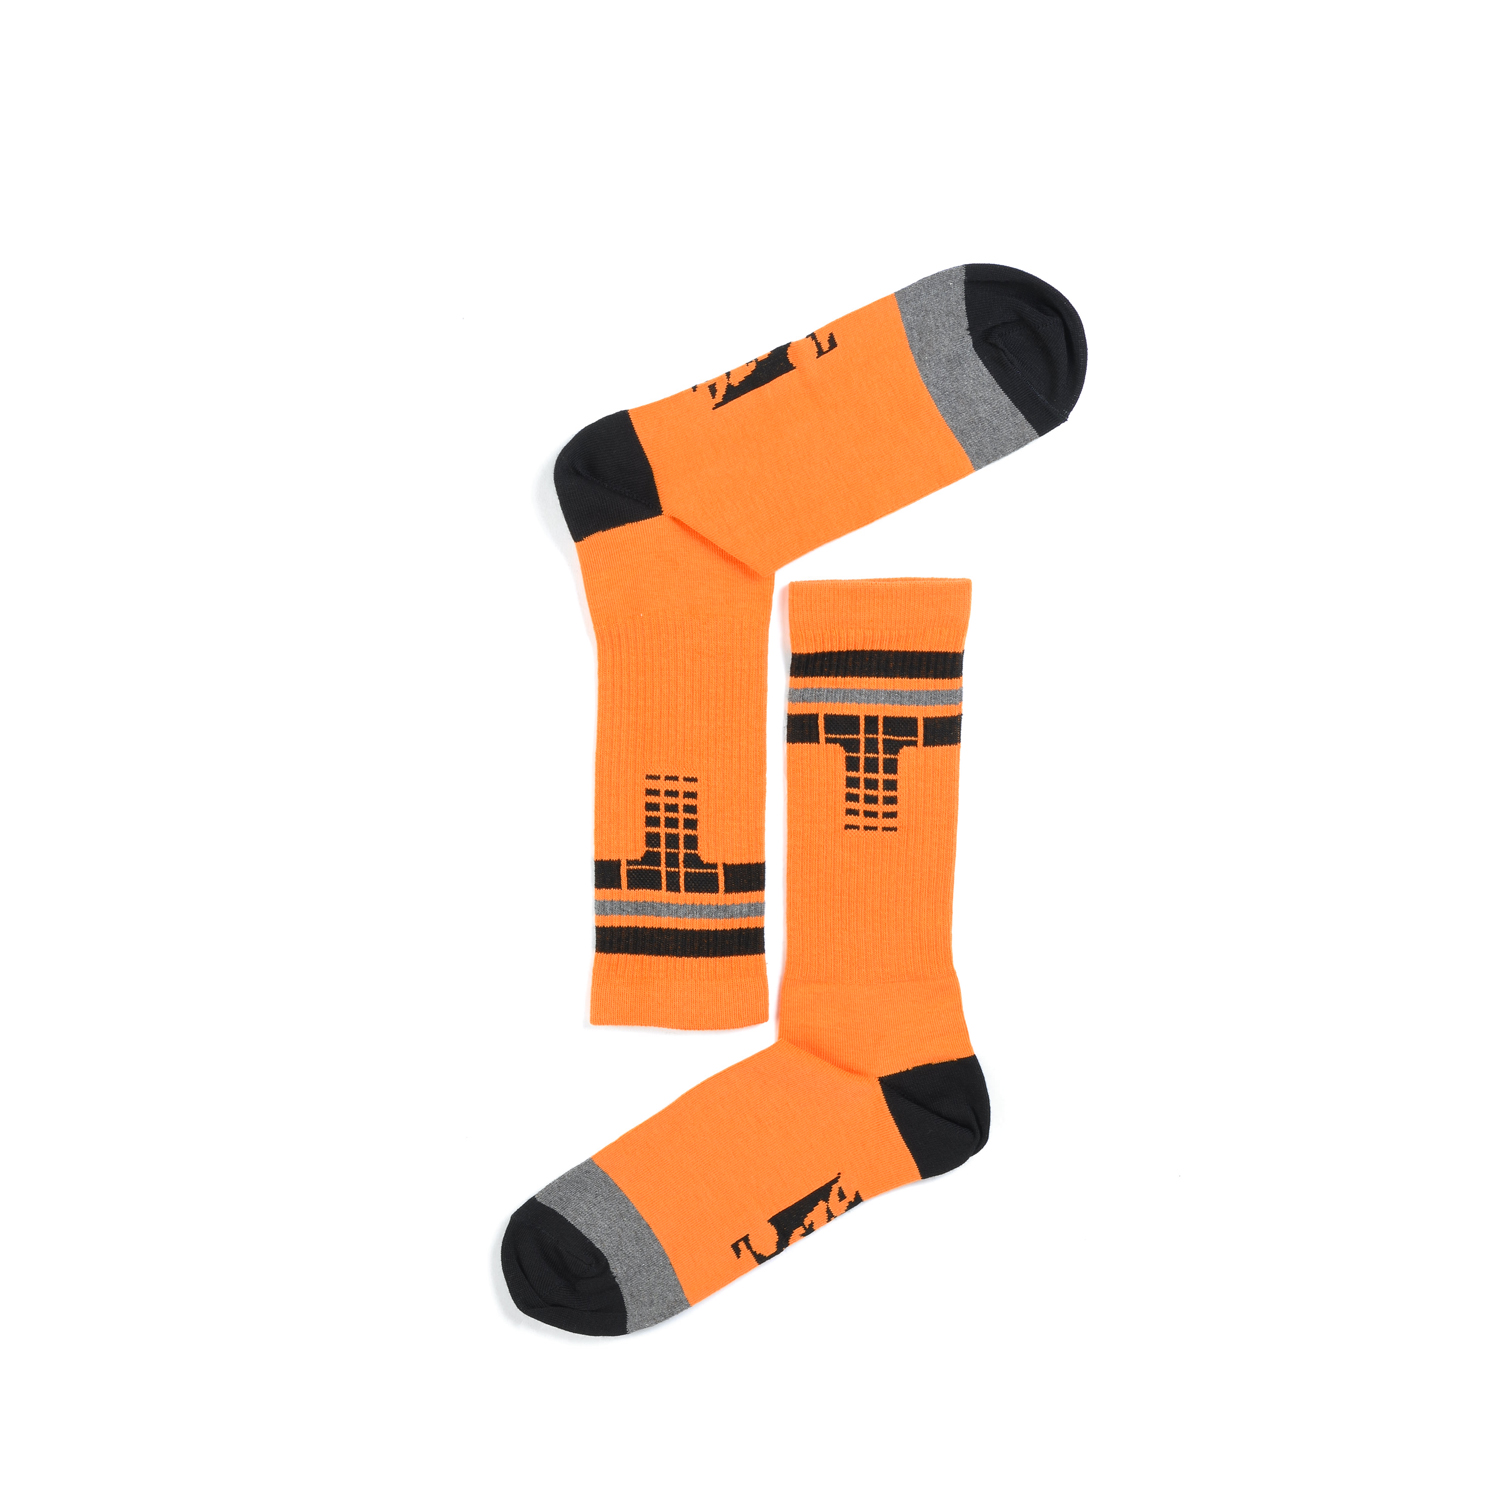 Tisza shoes - Socks - Derby orange